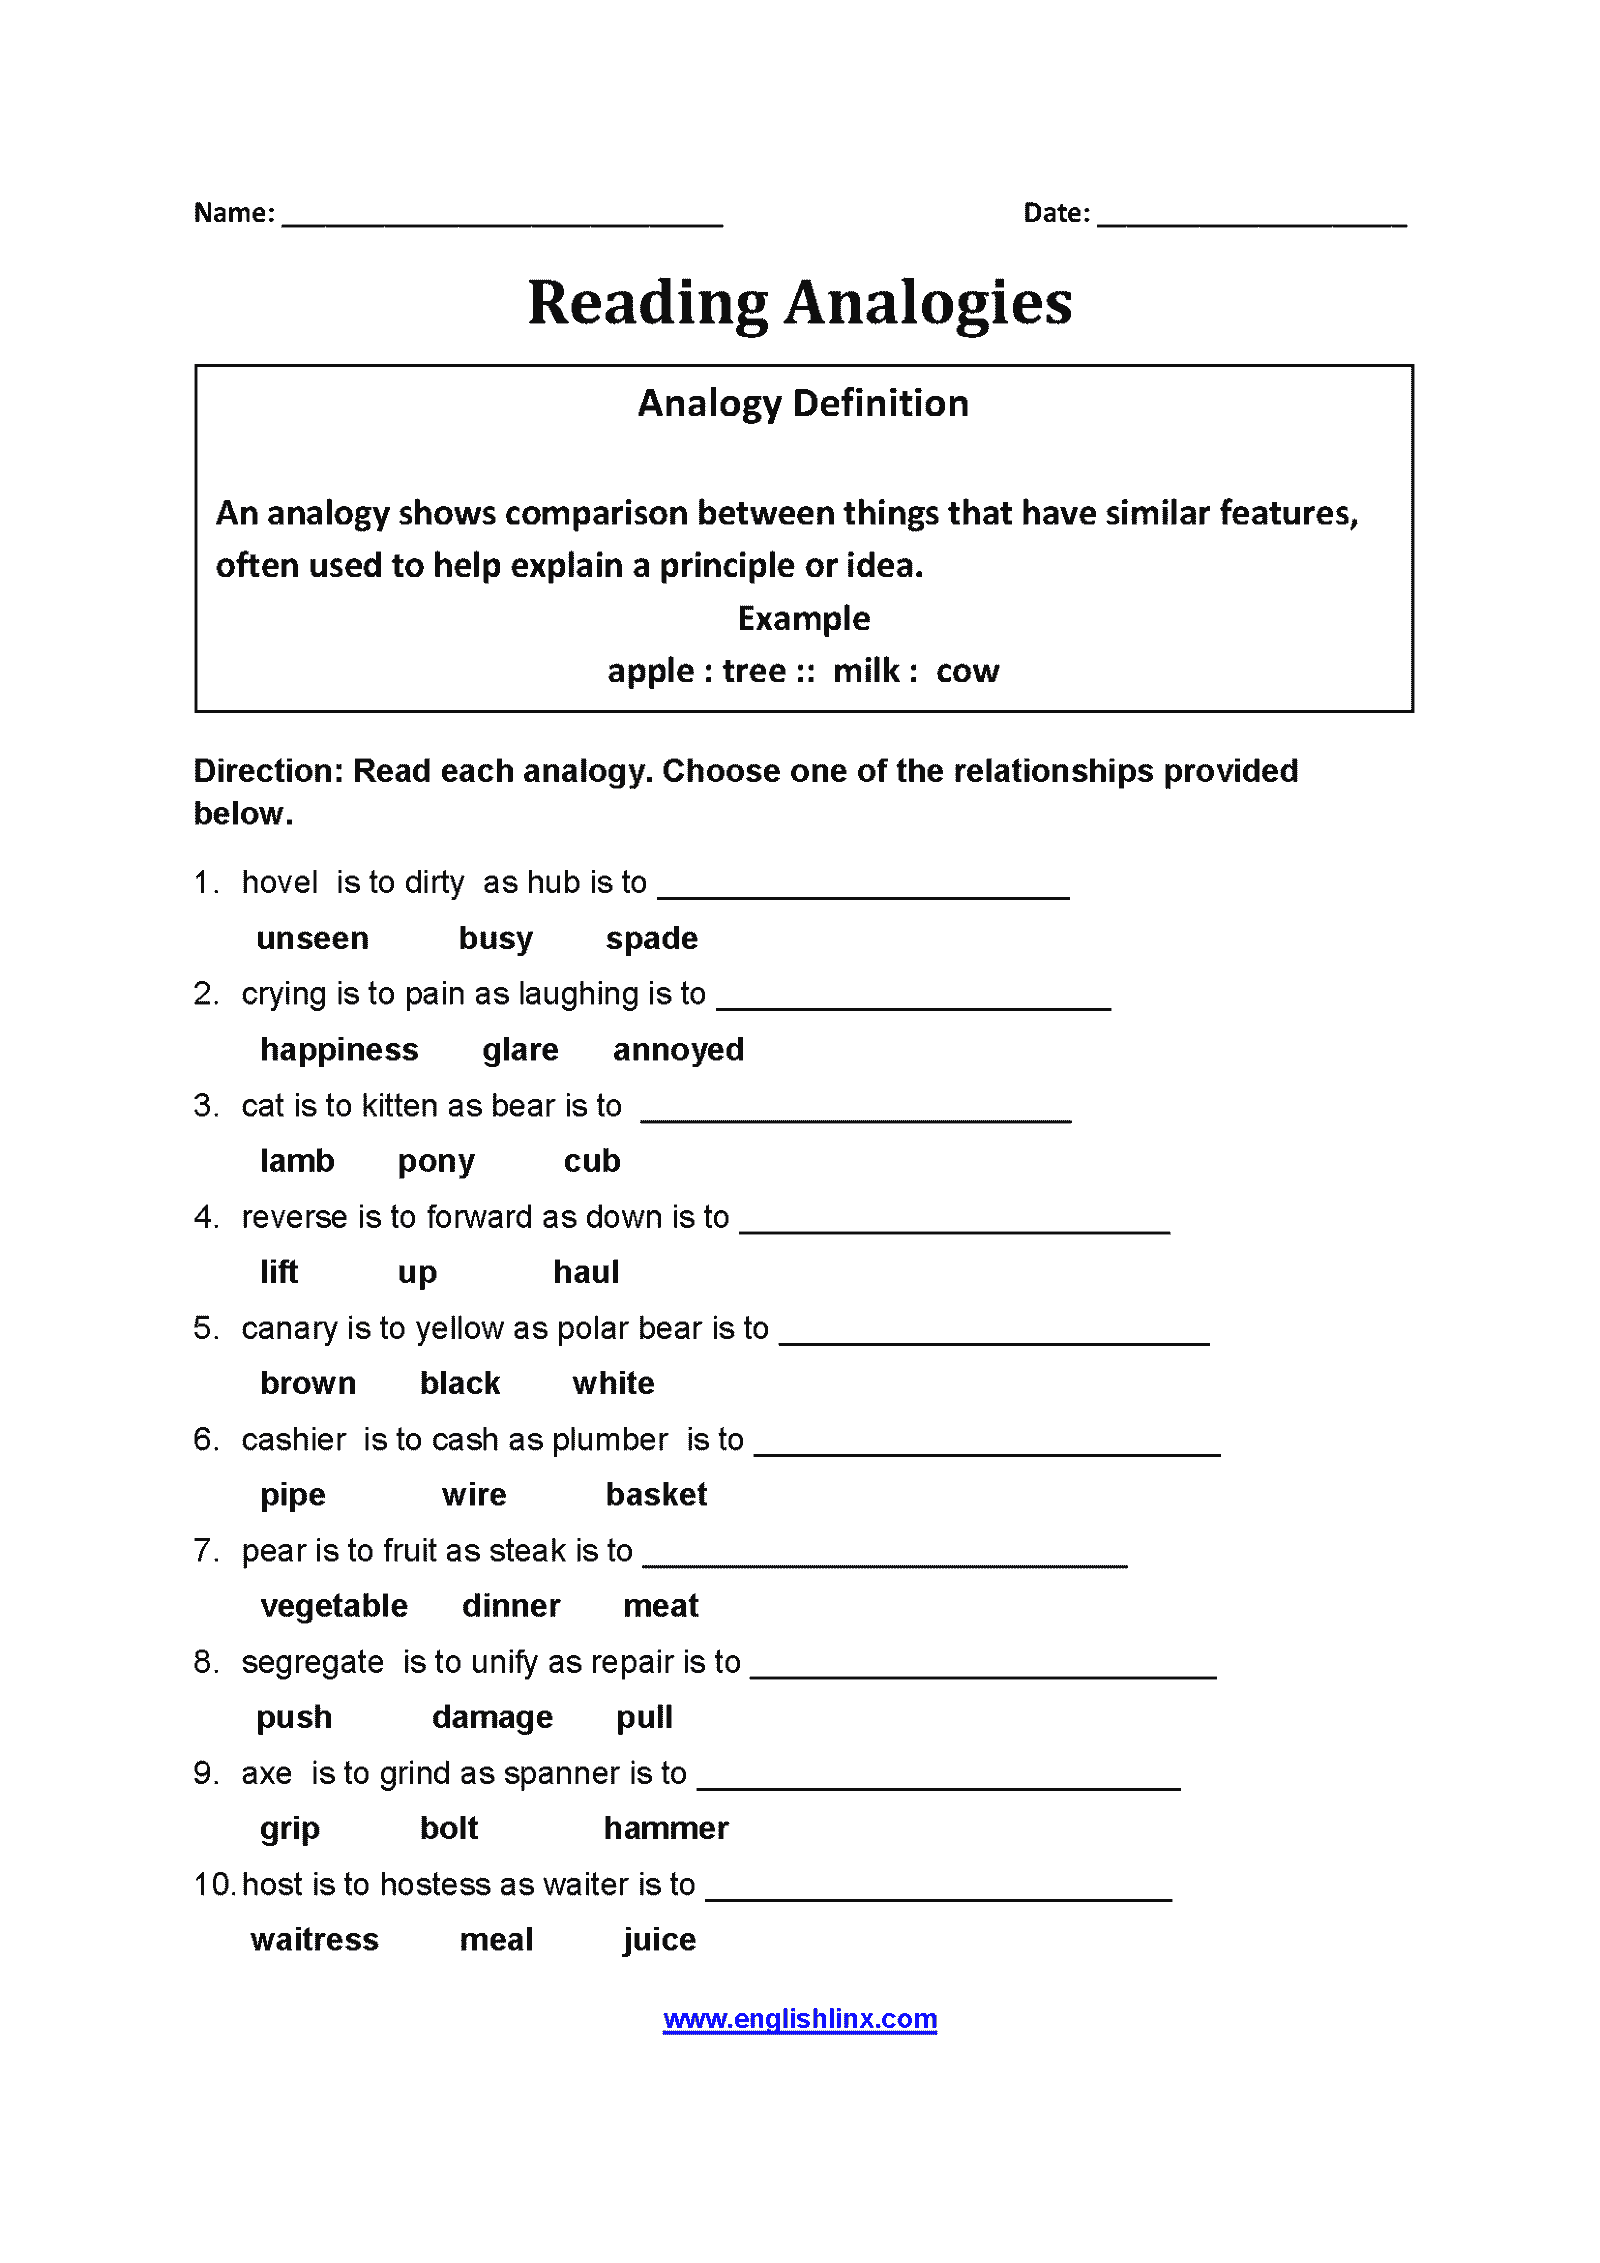 completing-analogies-worksheets-worksheetscity